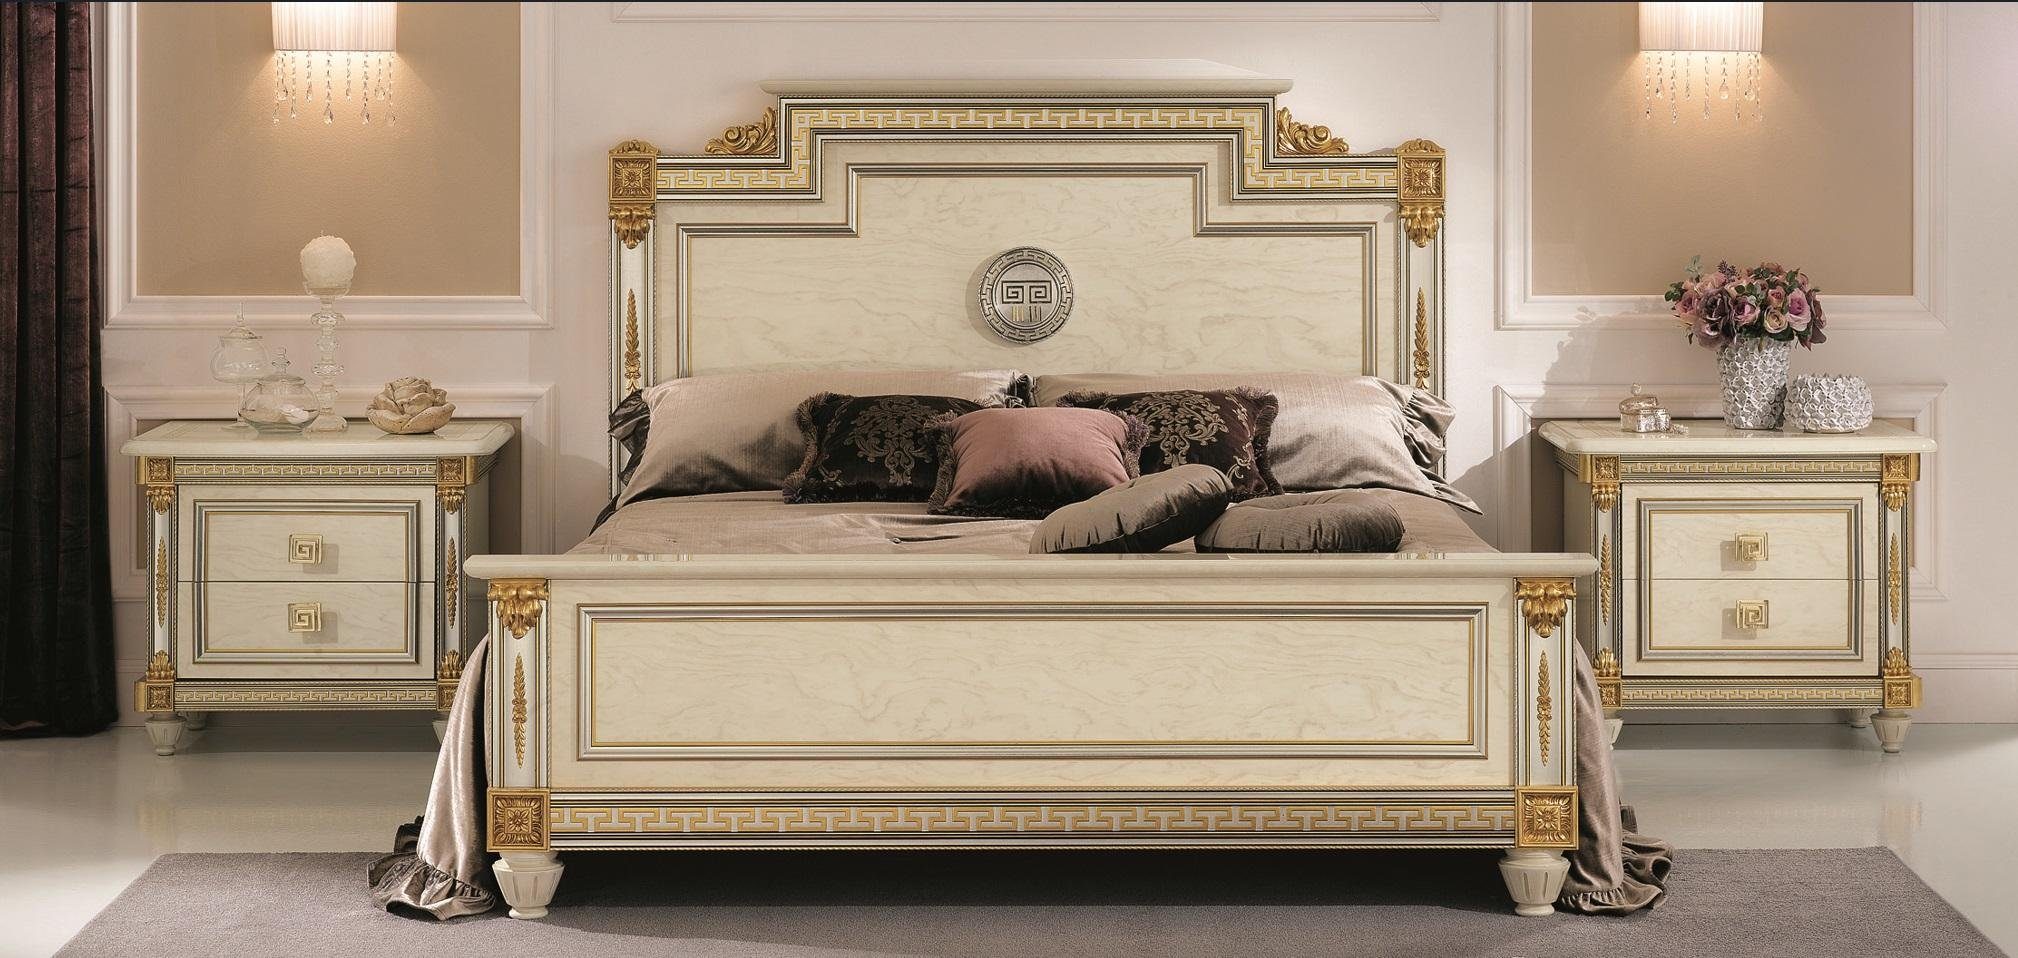 Doppelbett Betten Möbel Bett arredoclassic Holzbett Echtholz Italienische JVmoebel